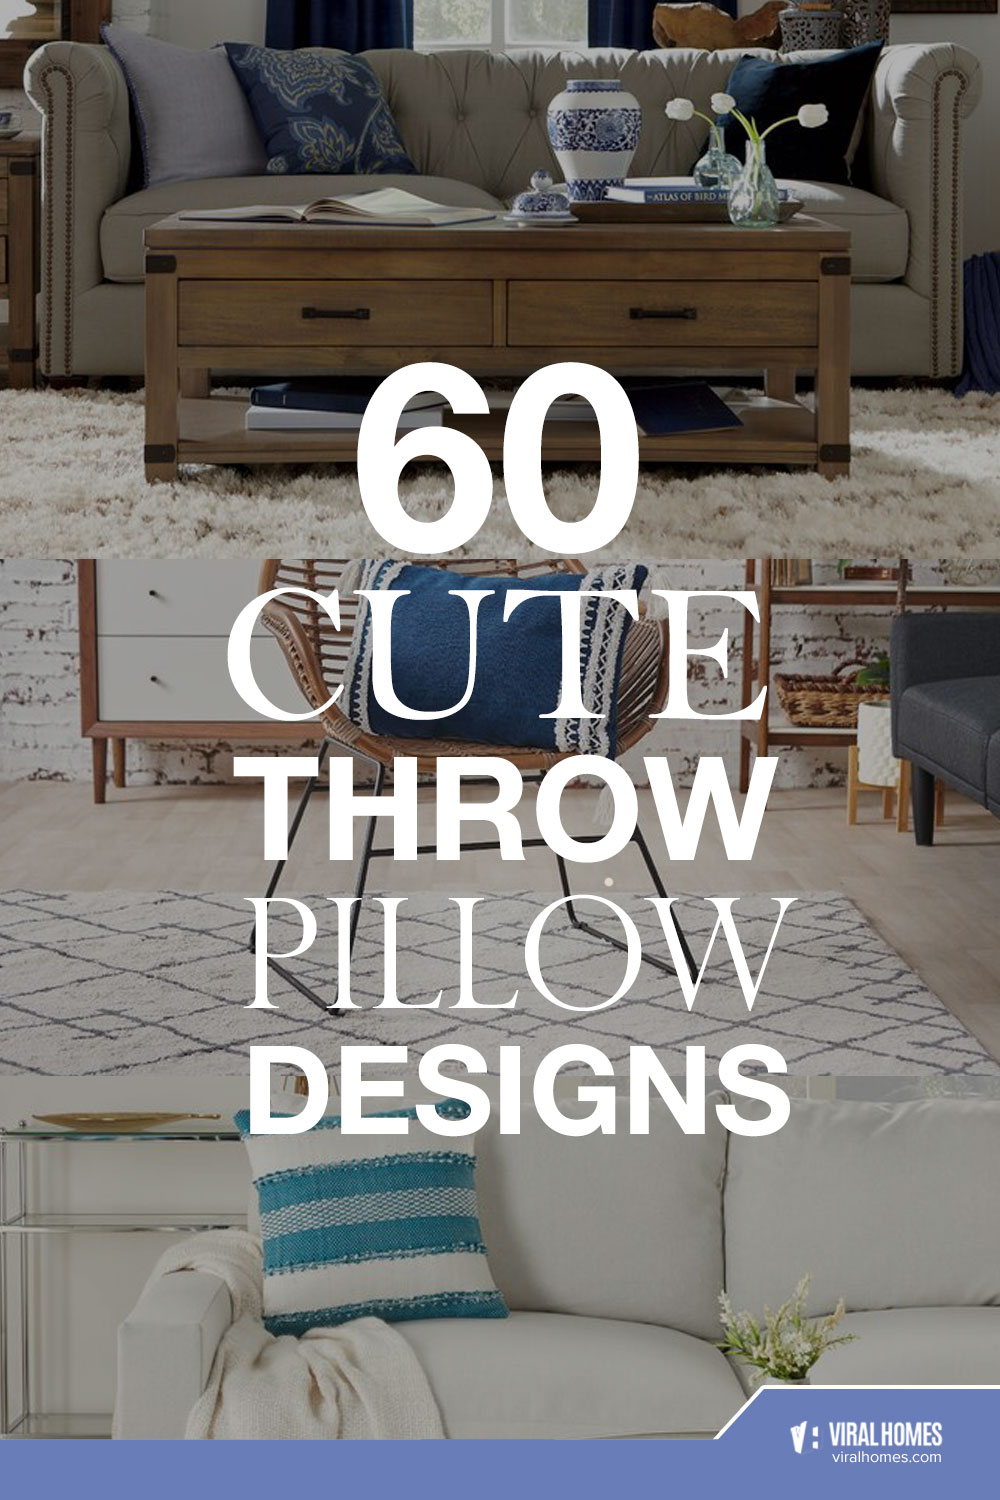 Throw Pillows Design Ideas To Brighten Up a Room